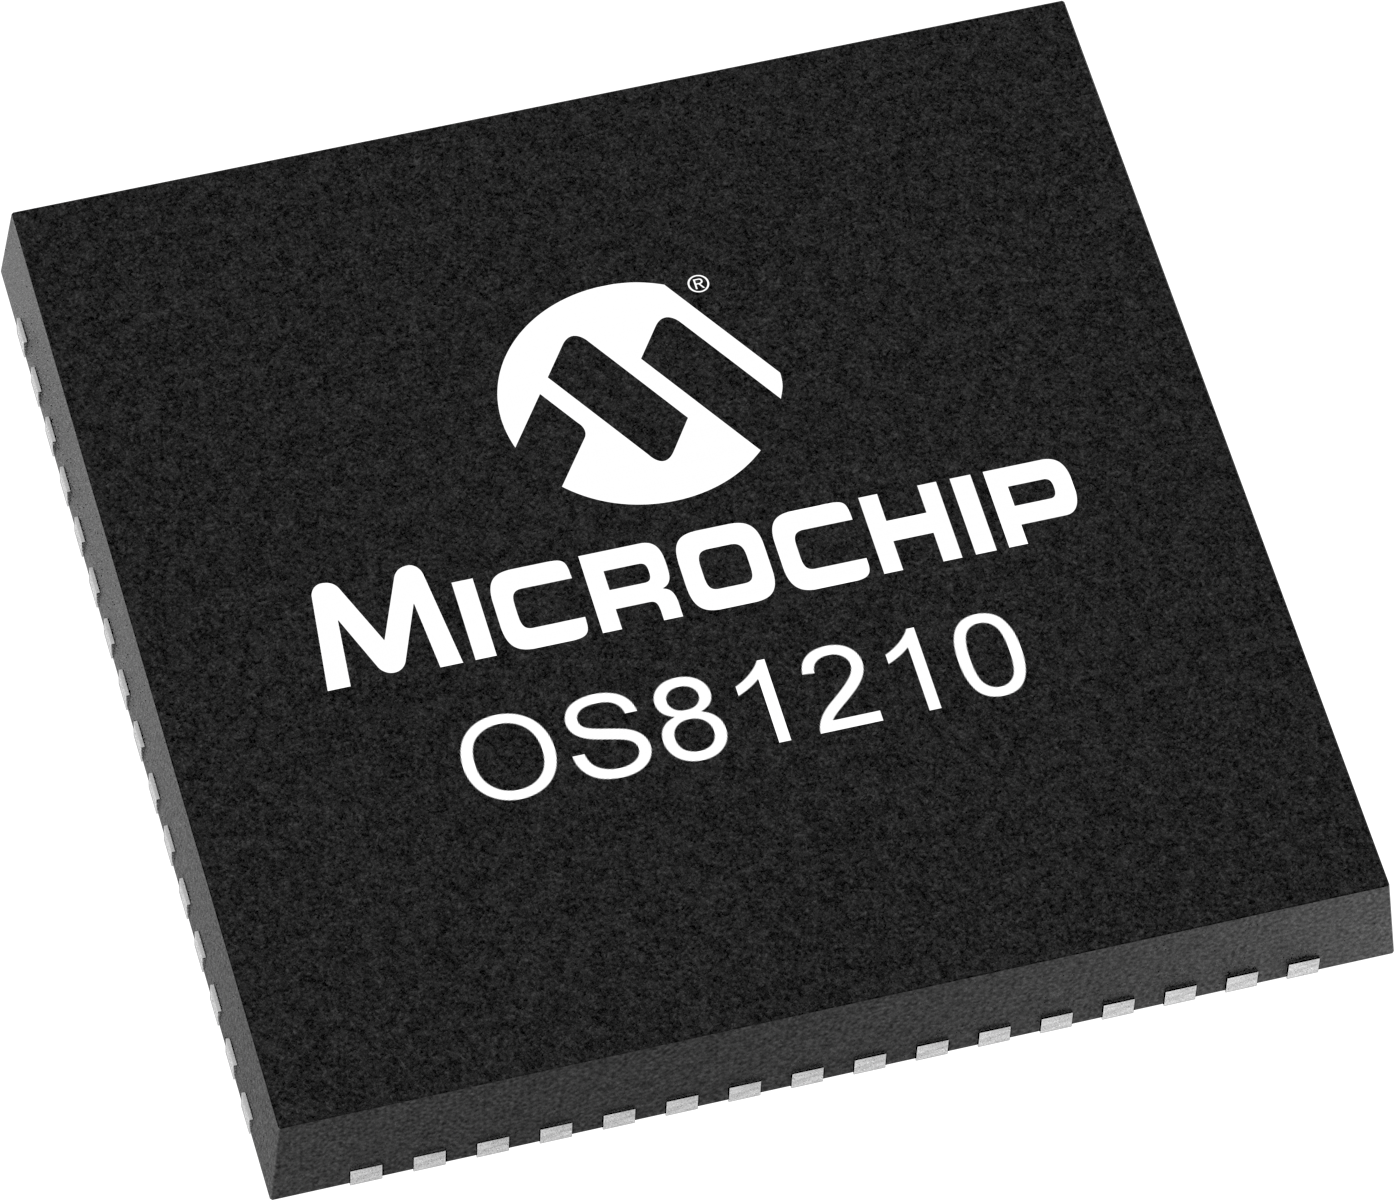 Microchip-1 